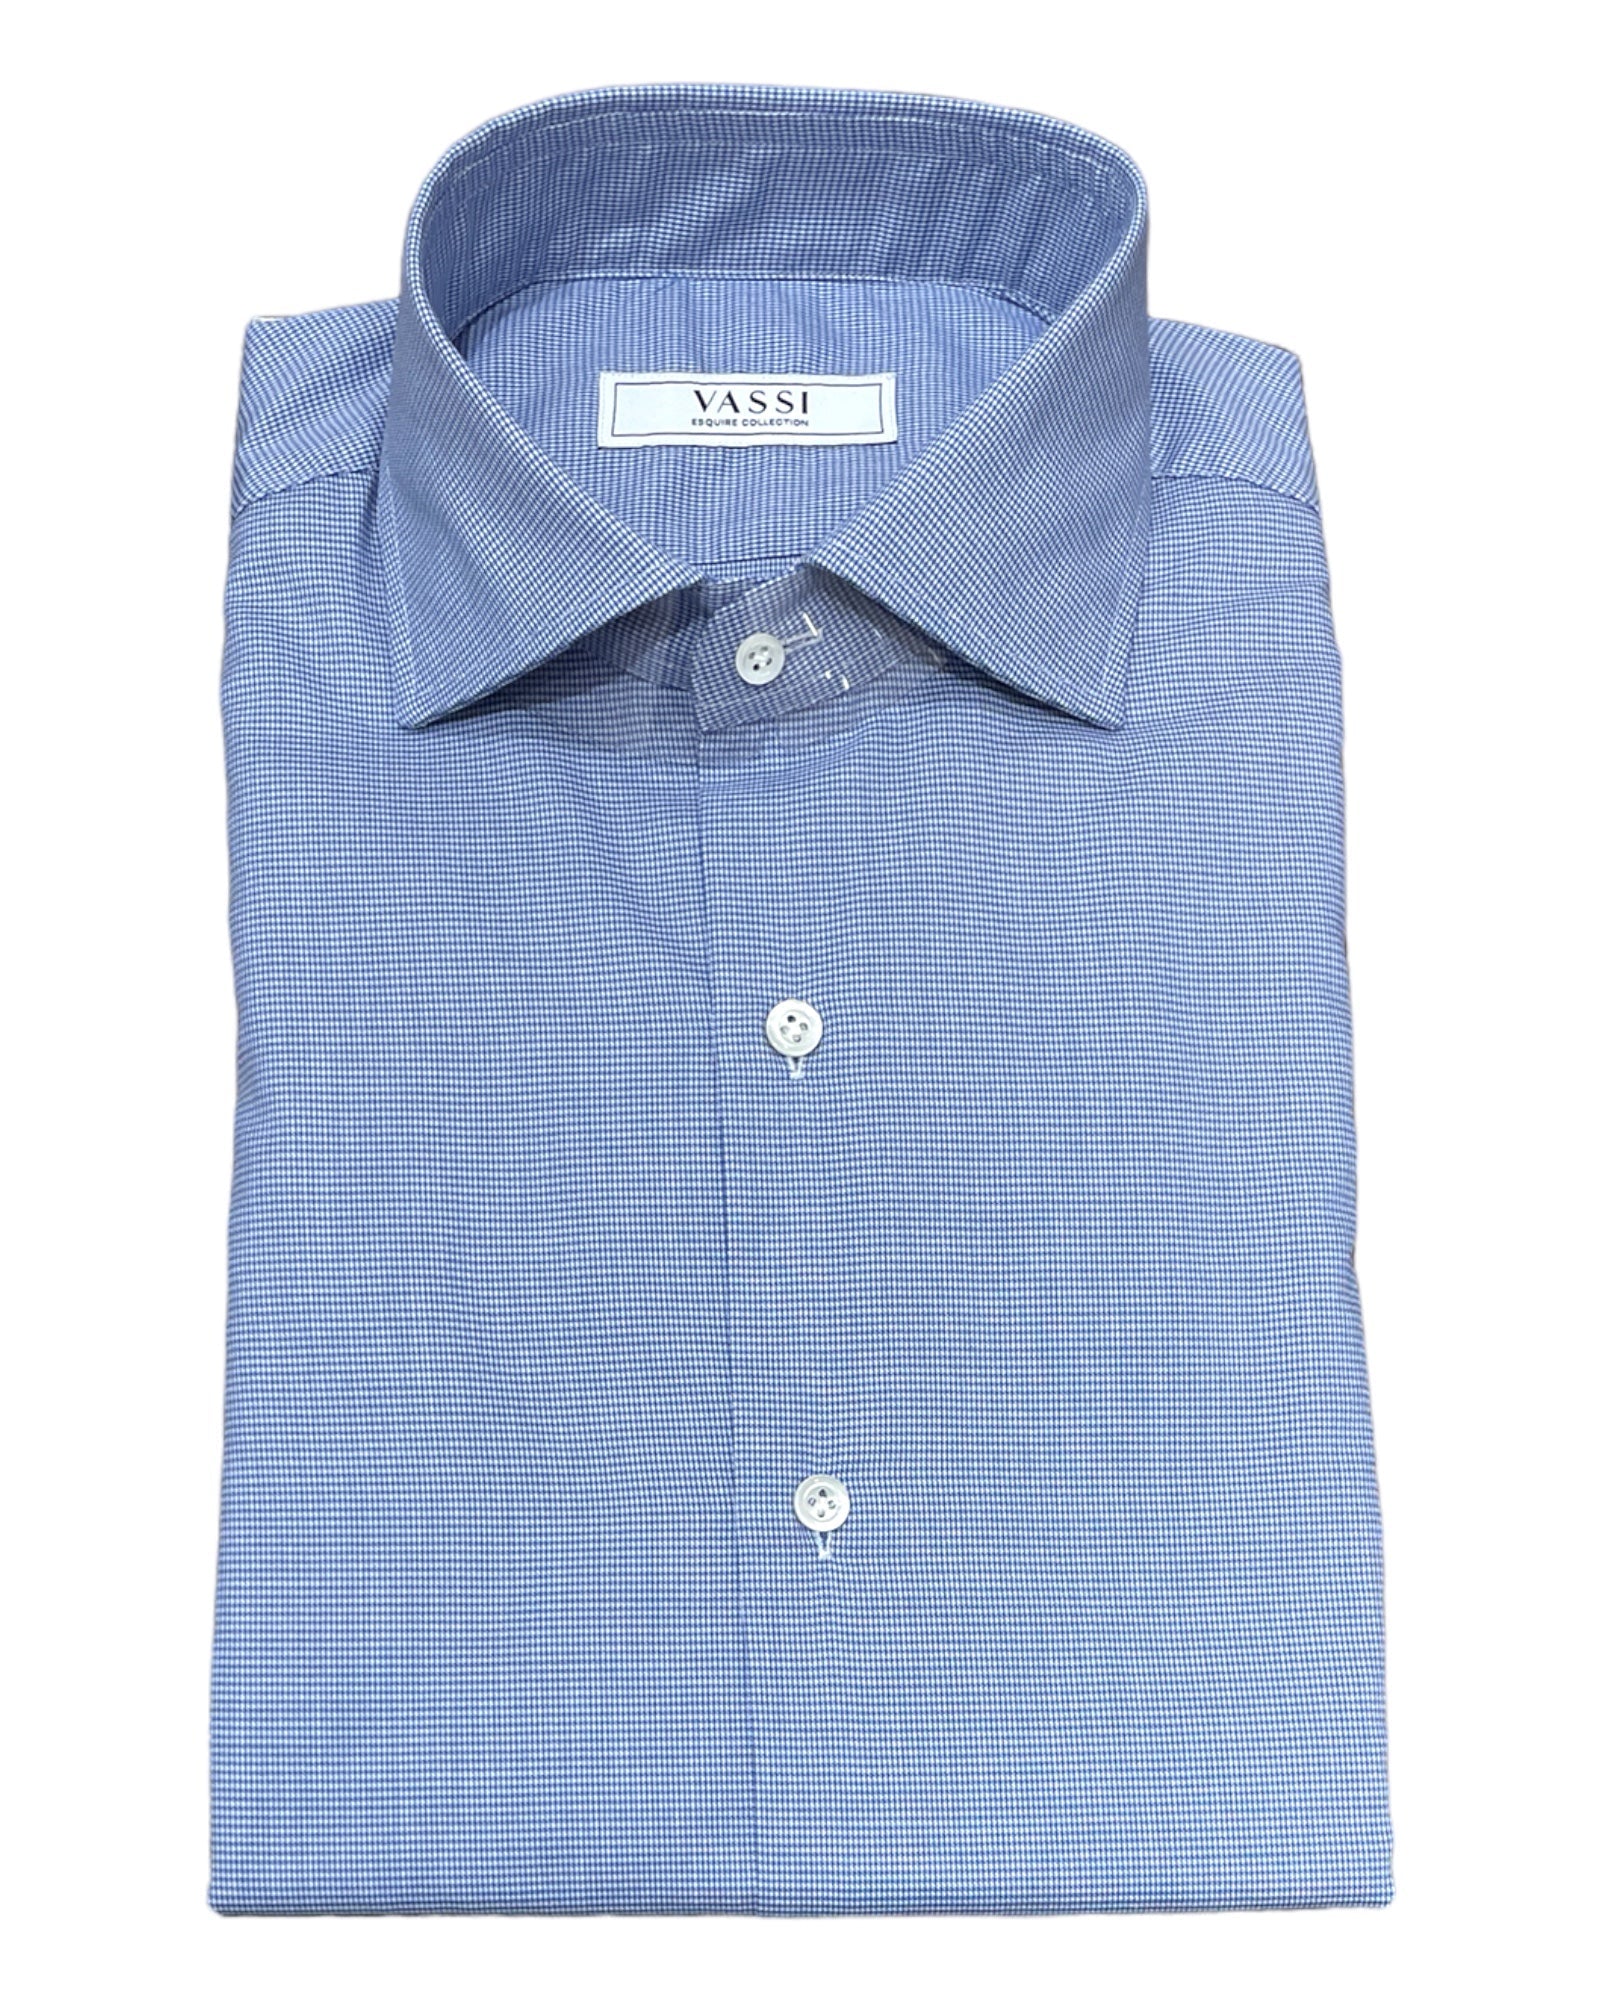 VASSI - Thomas Mason Journey Twill Shirt - Blue SPORT SHIRTSM